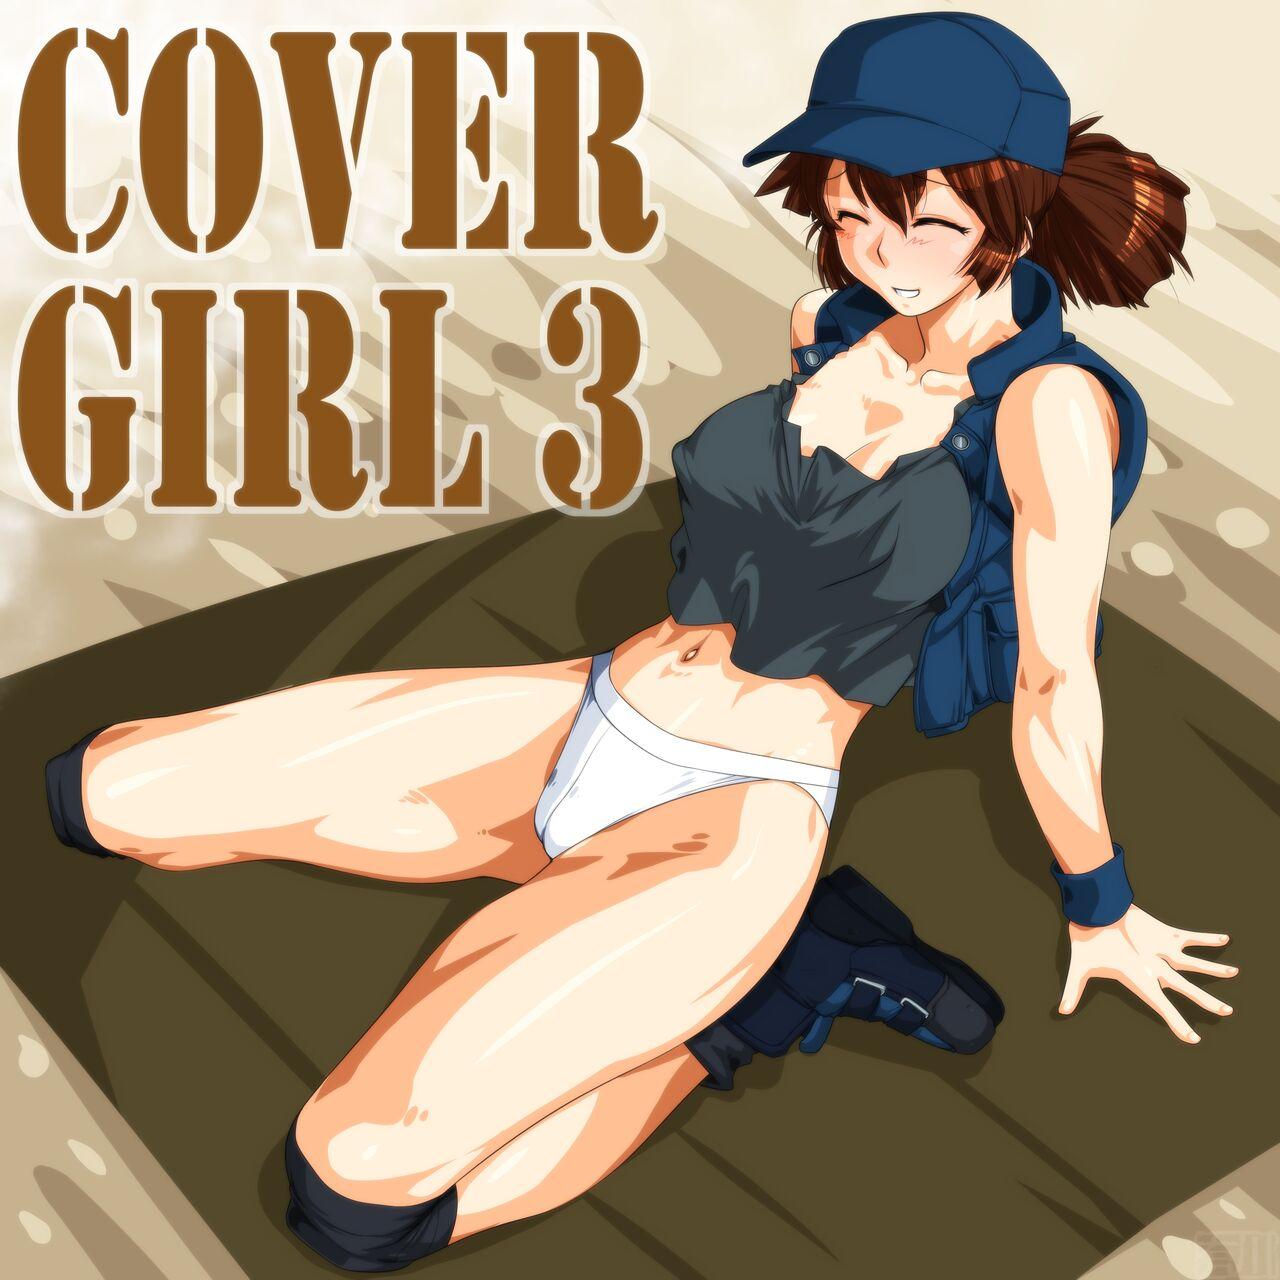 COVER GIRL 3 17